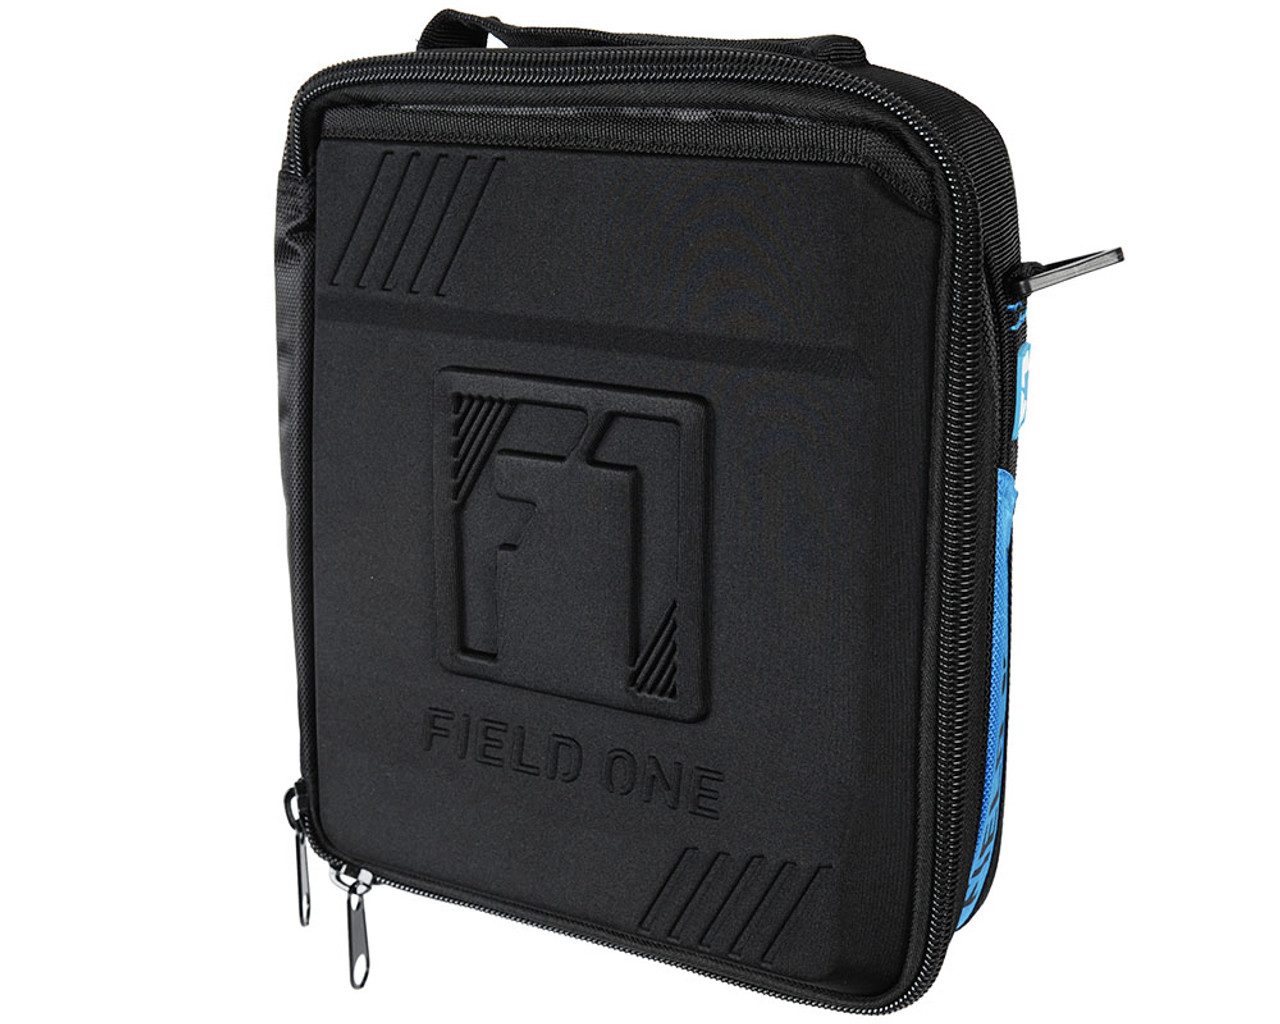 Field One Paintball Marker Bag - Standard